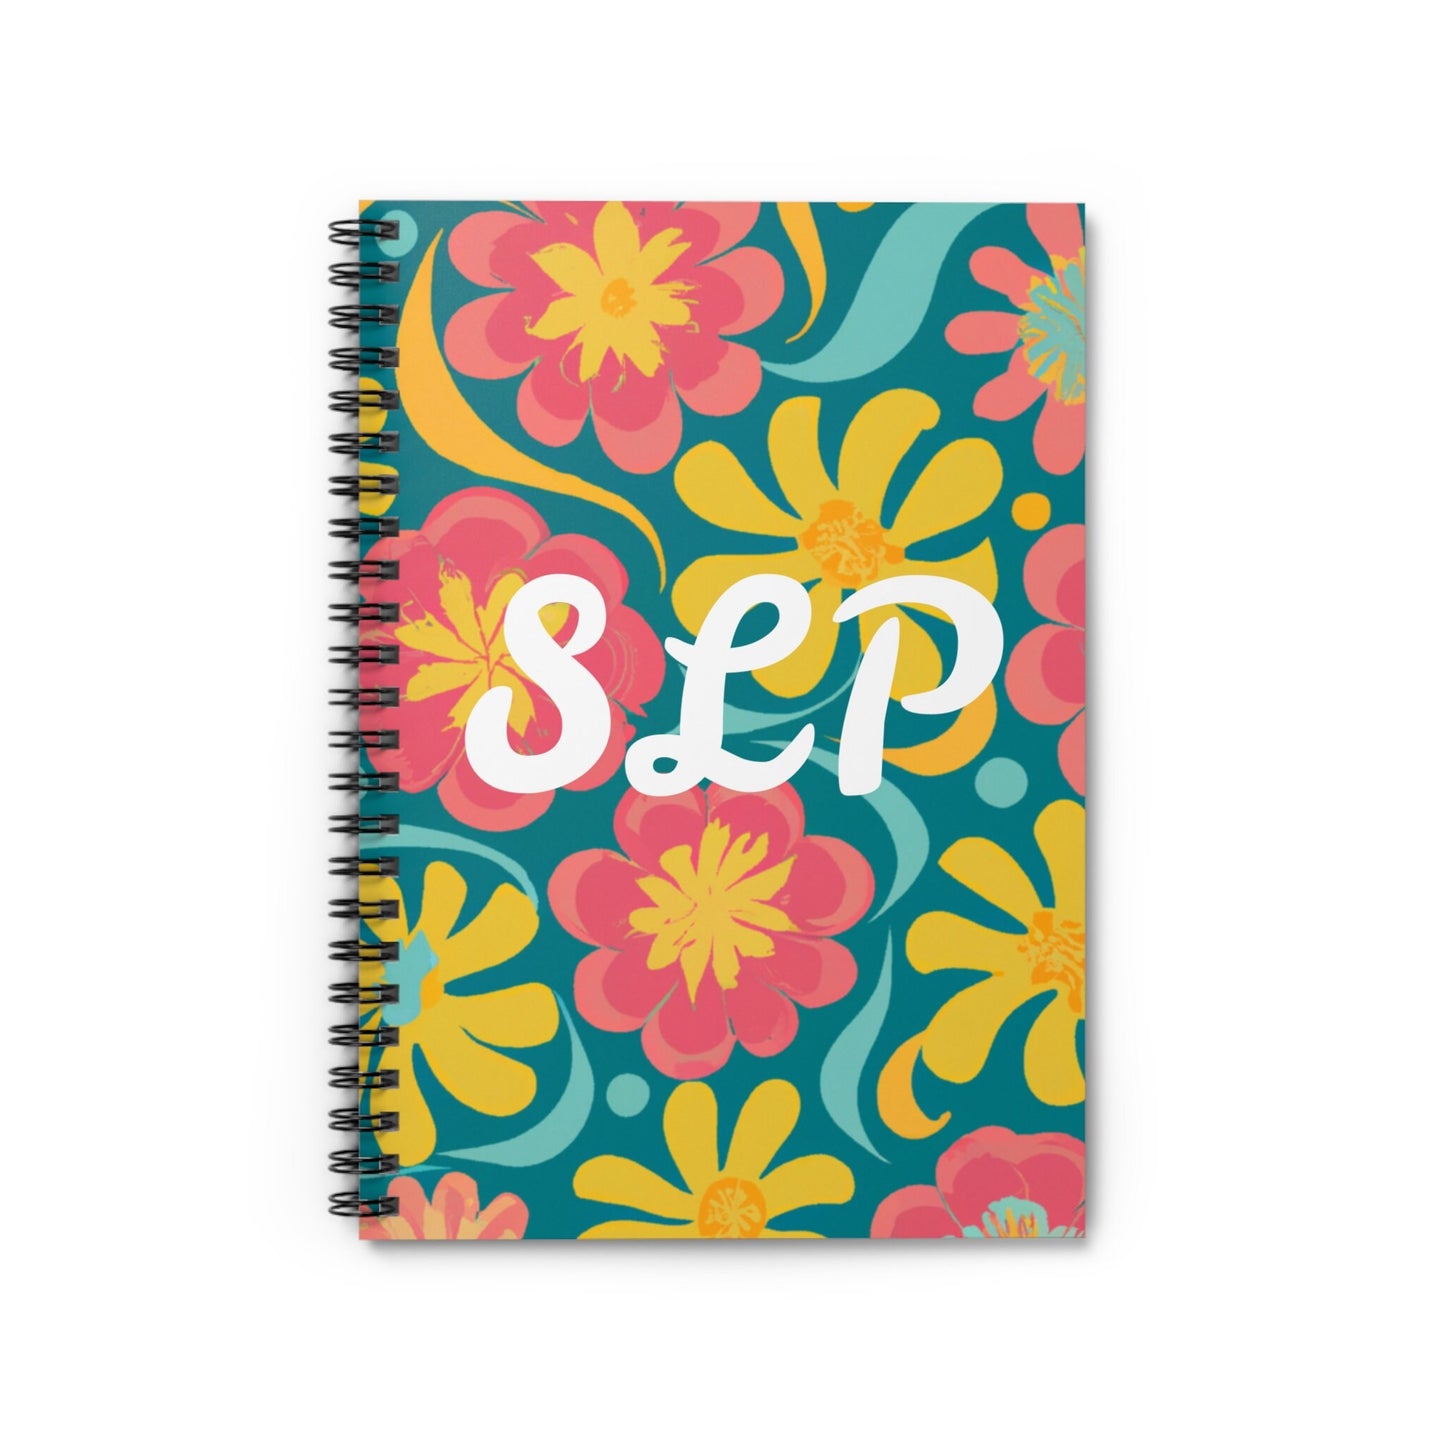 SLP Retro Floral Notebook Gift